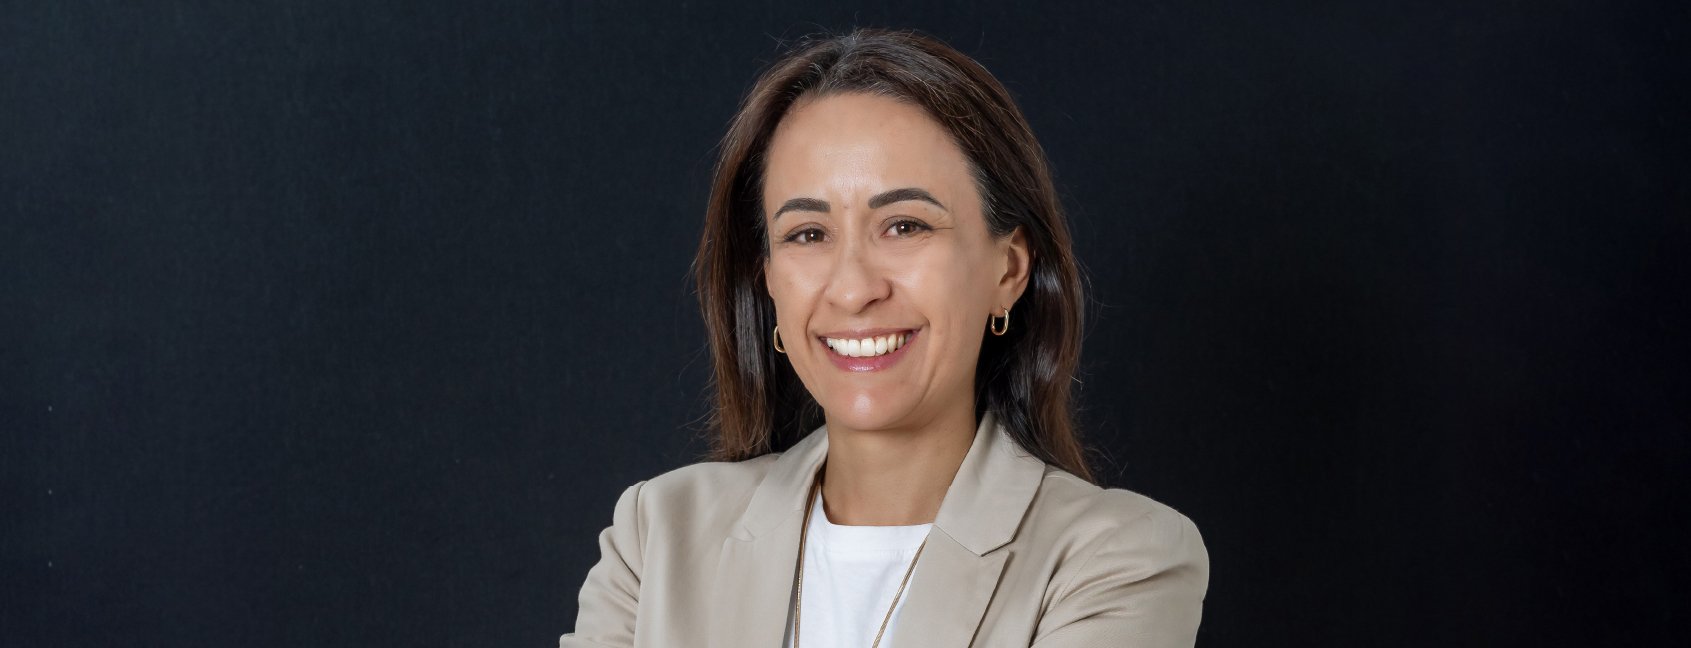 María Gabriela Moncayo, nova Directora Sénior de Assuntos Públicos da LLYC no Equador